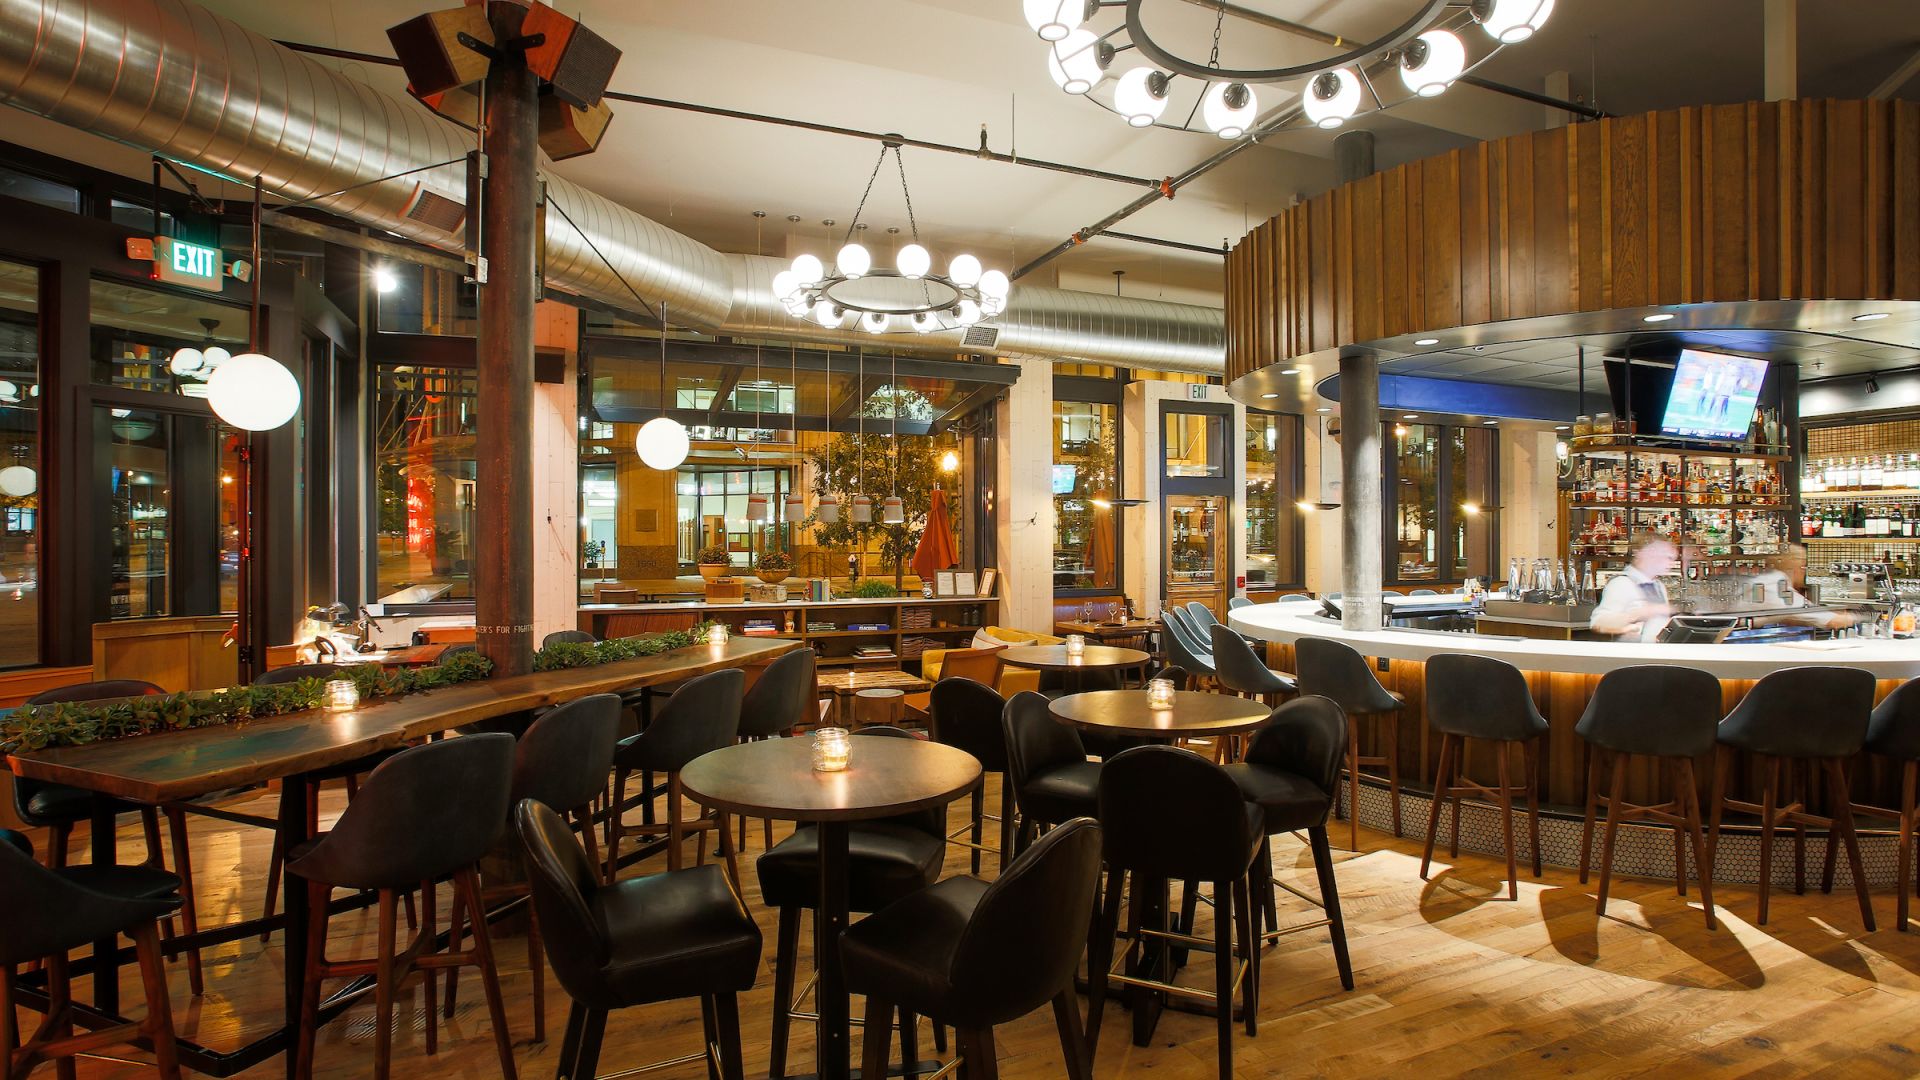 Urban Farmer Denver Dining Room - beautiful bar and seating areas